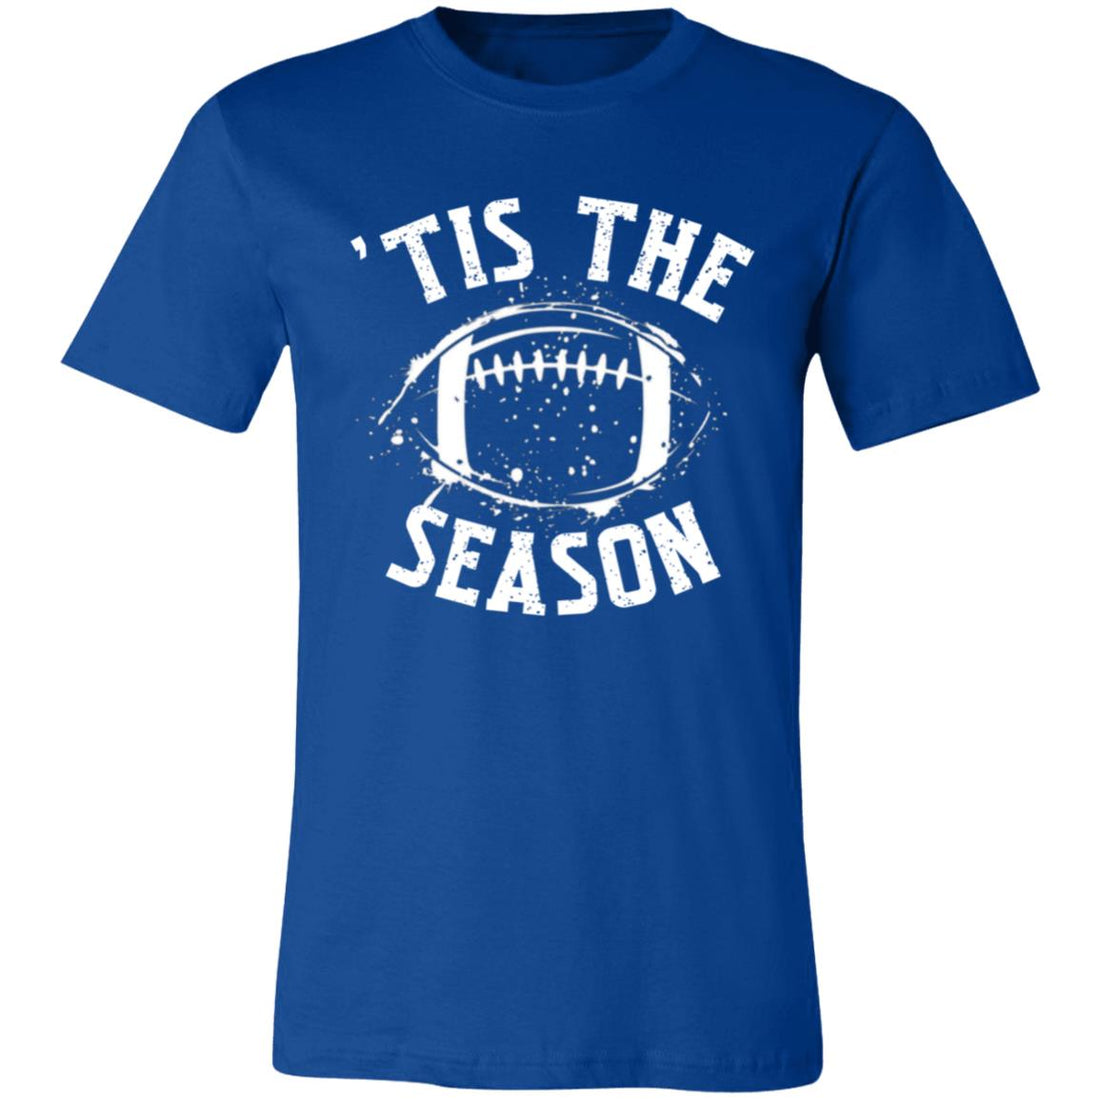 Tis The Season Football Short-Sleeve T-Shirt - T-Shirts - Positively Sassy - Tis The Season Football Short-Sleeve T-Shirt